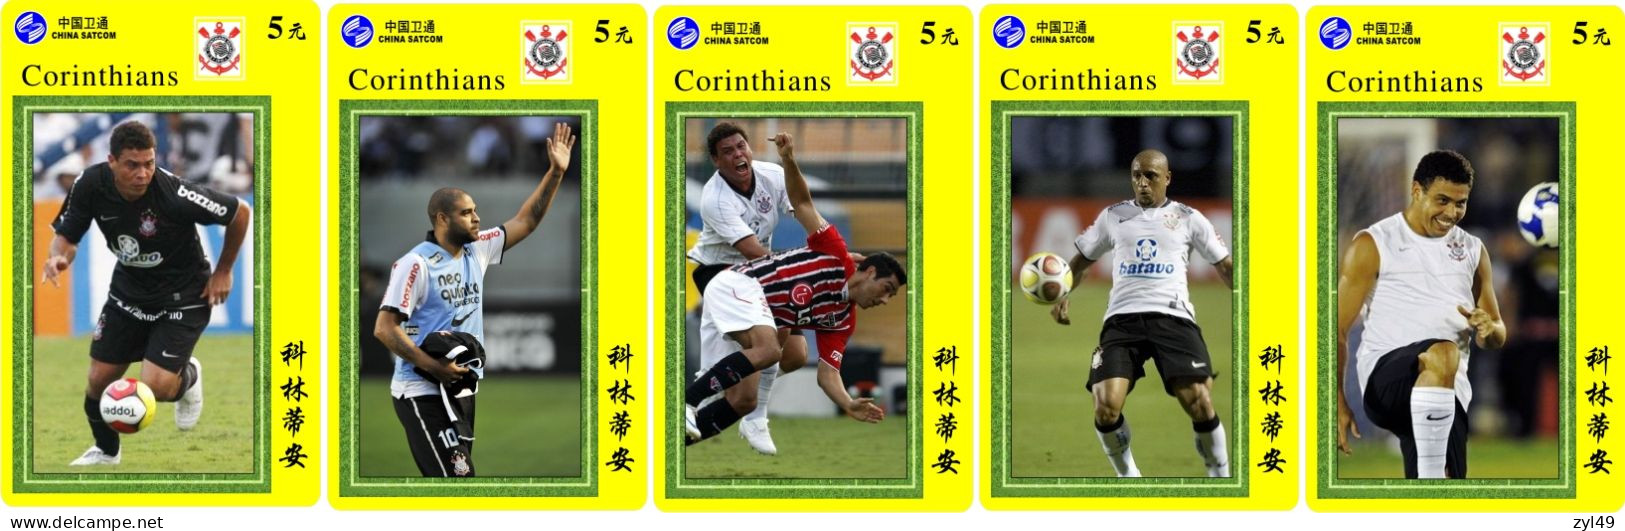 F13002 China phone cards Football Corinthians 48pcs